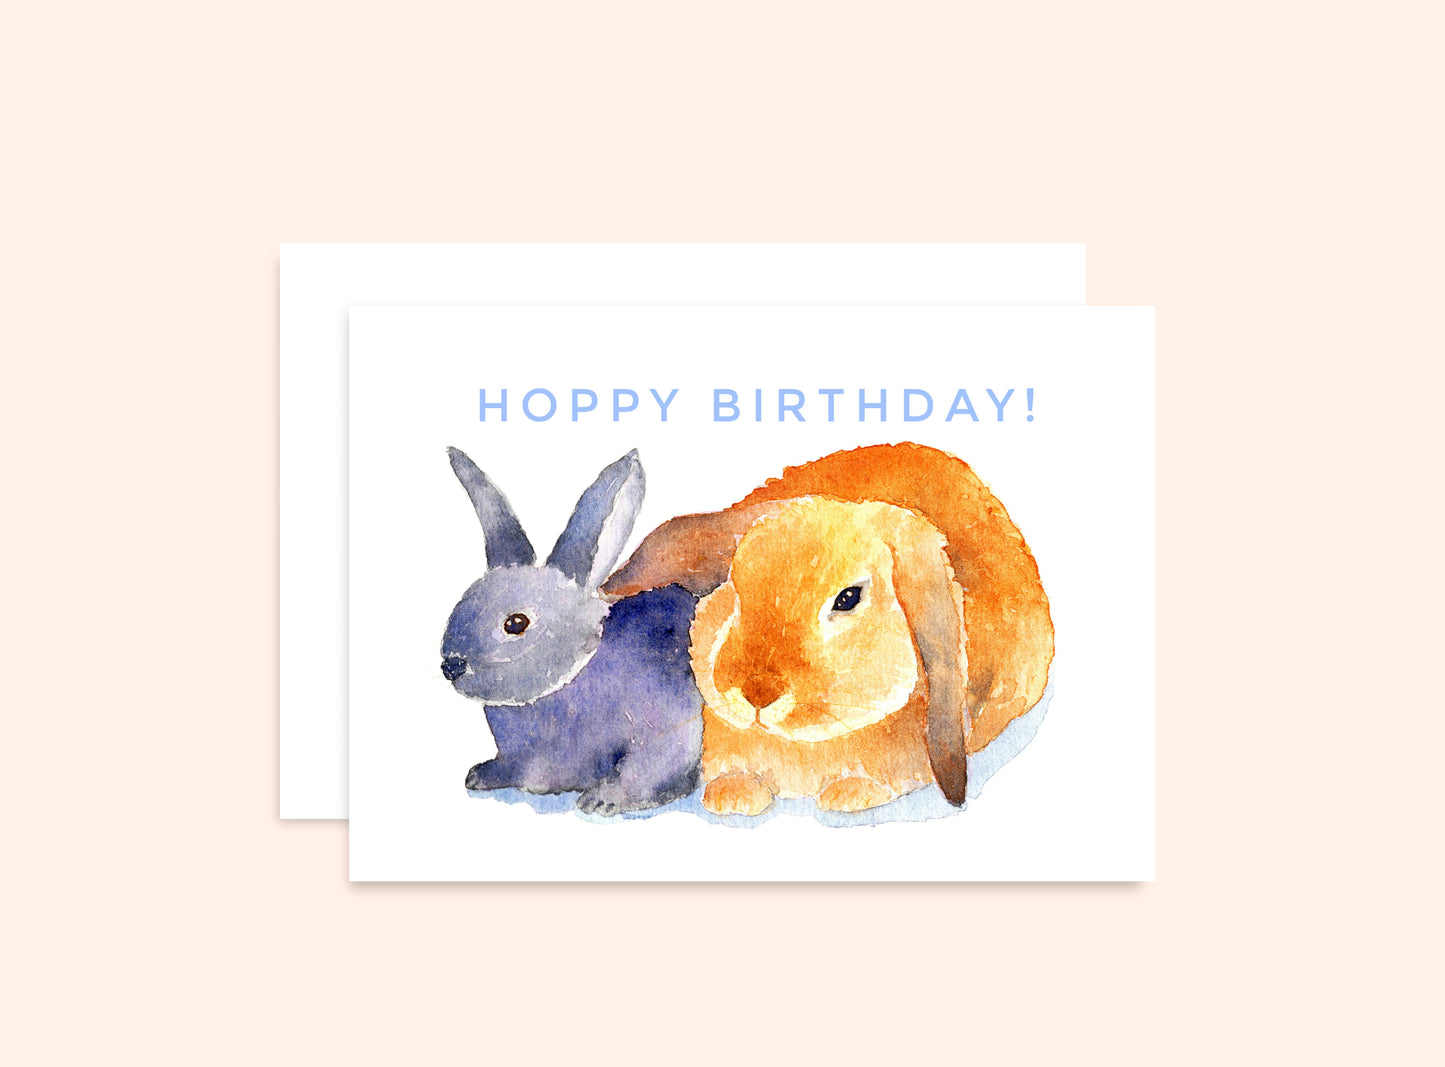 Bunny Birthday Card "Hoppy Birthday"